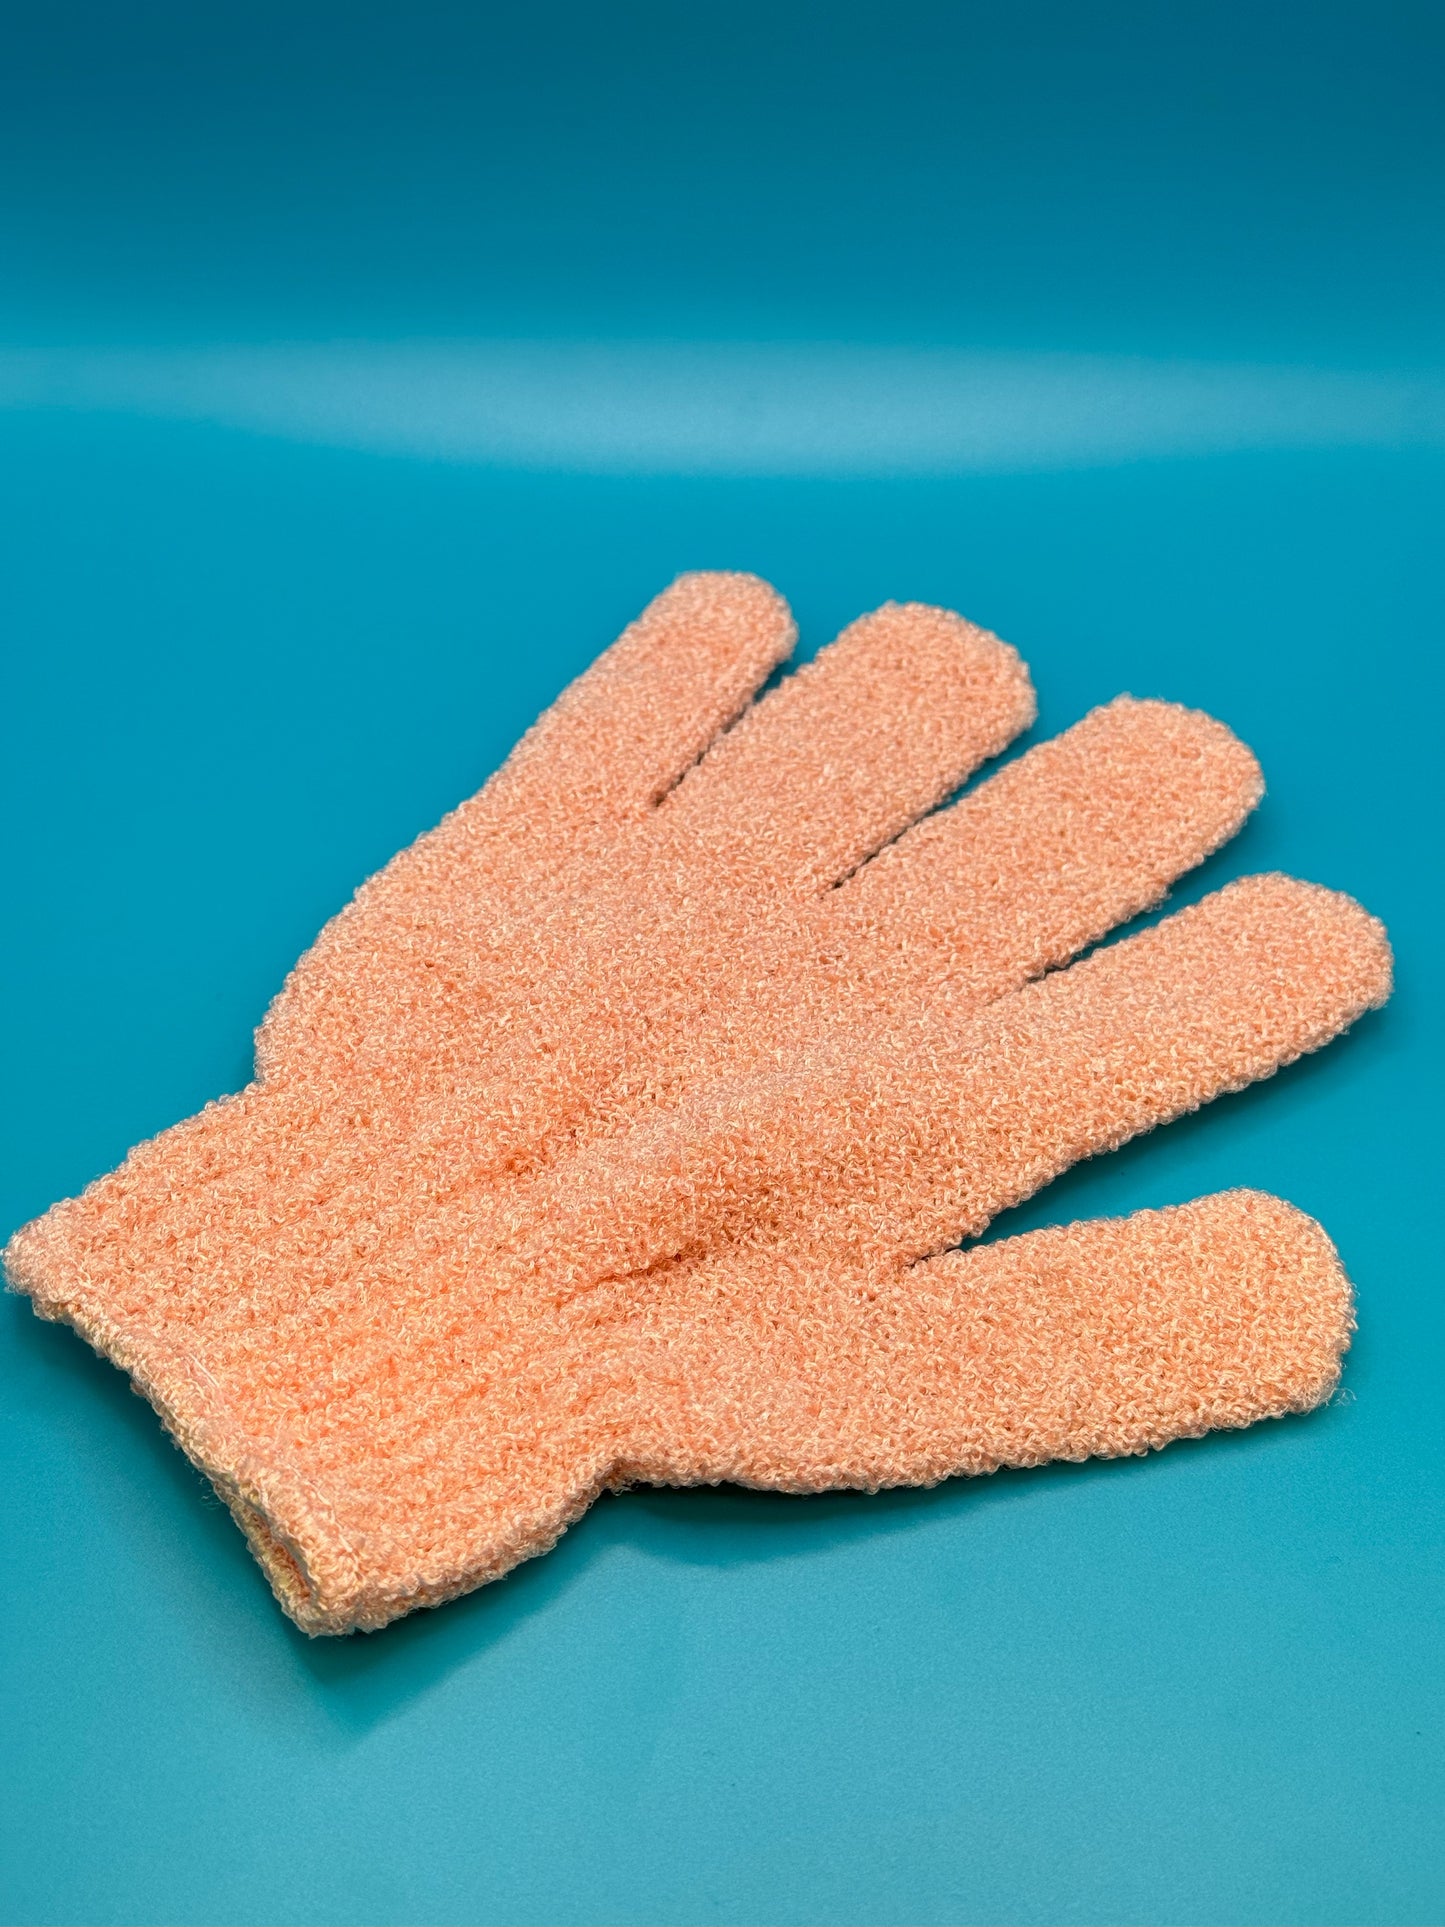 Exfoliating Glove